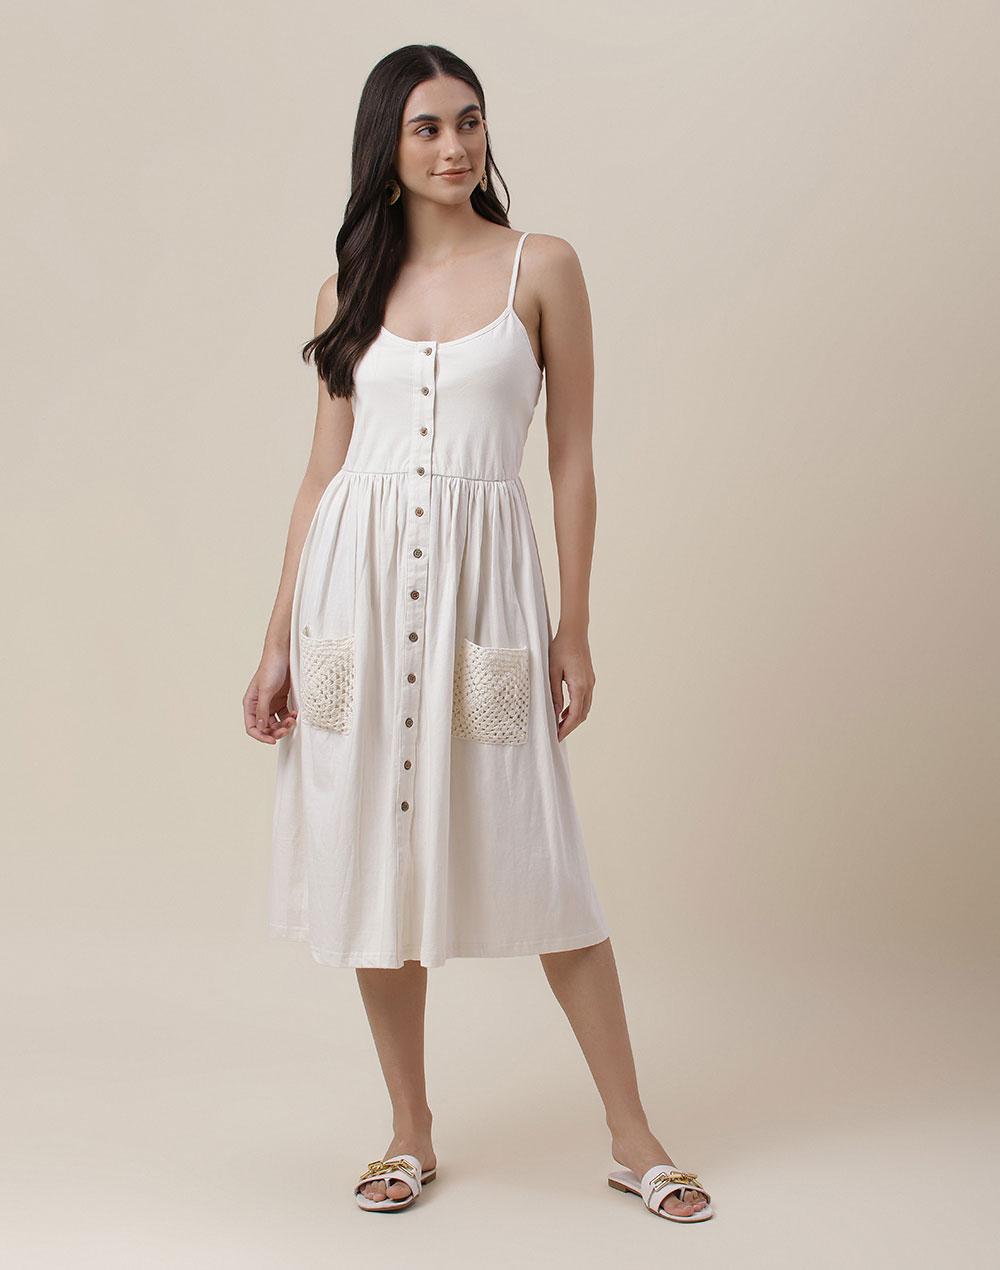 fabnu white cotton knee length midi dress